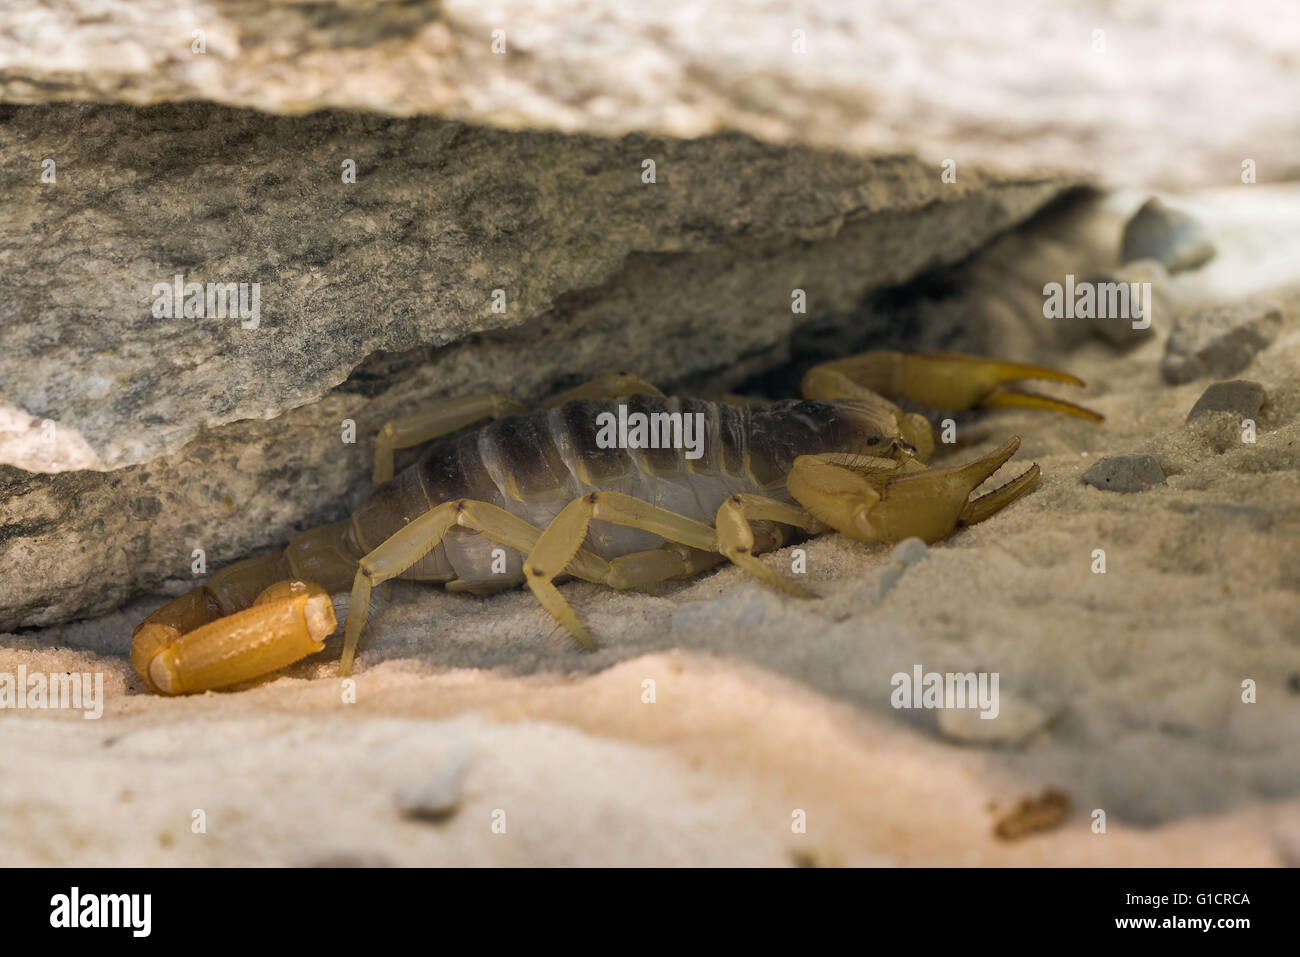 Desert scorpion under a Rock Stock Photo